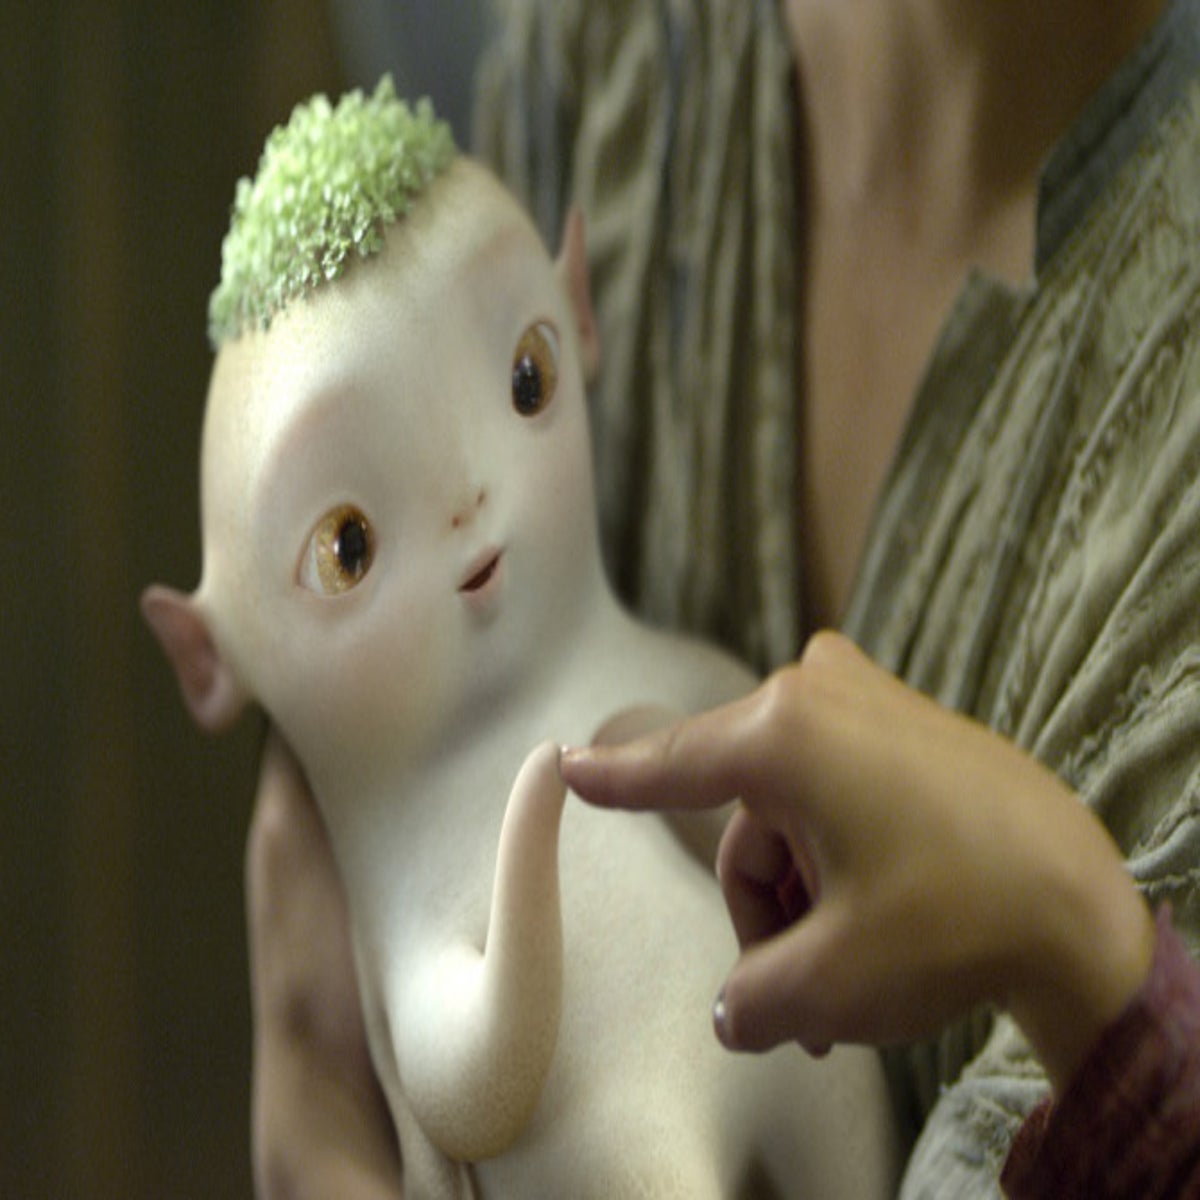 The Blockbuster-in-China, Man-Births-Radish Trailer: Monster Hunt